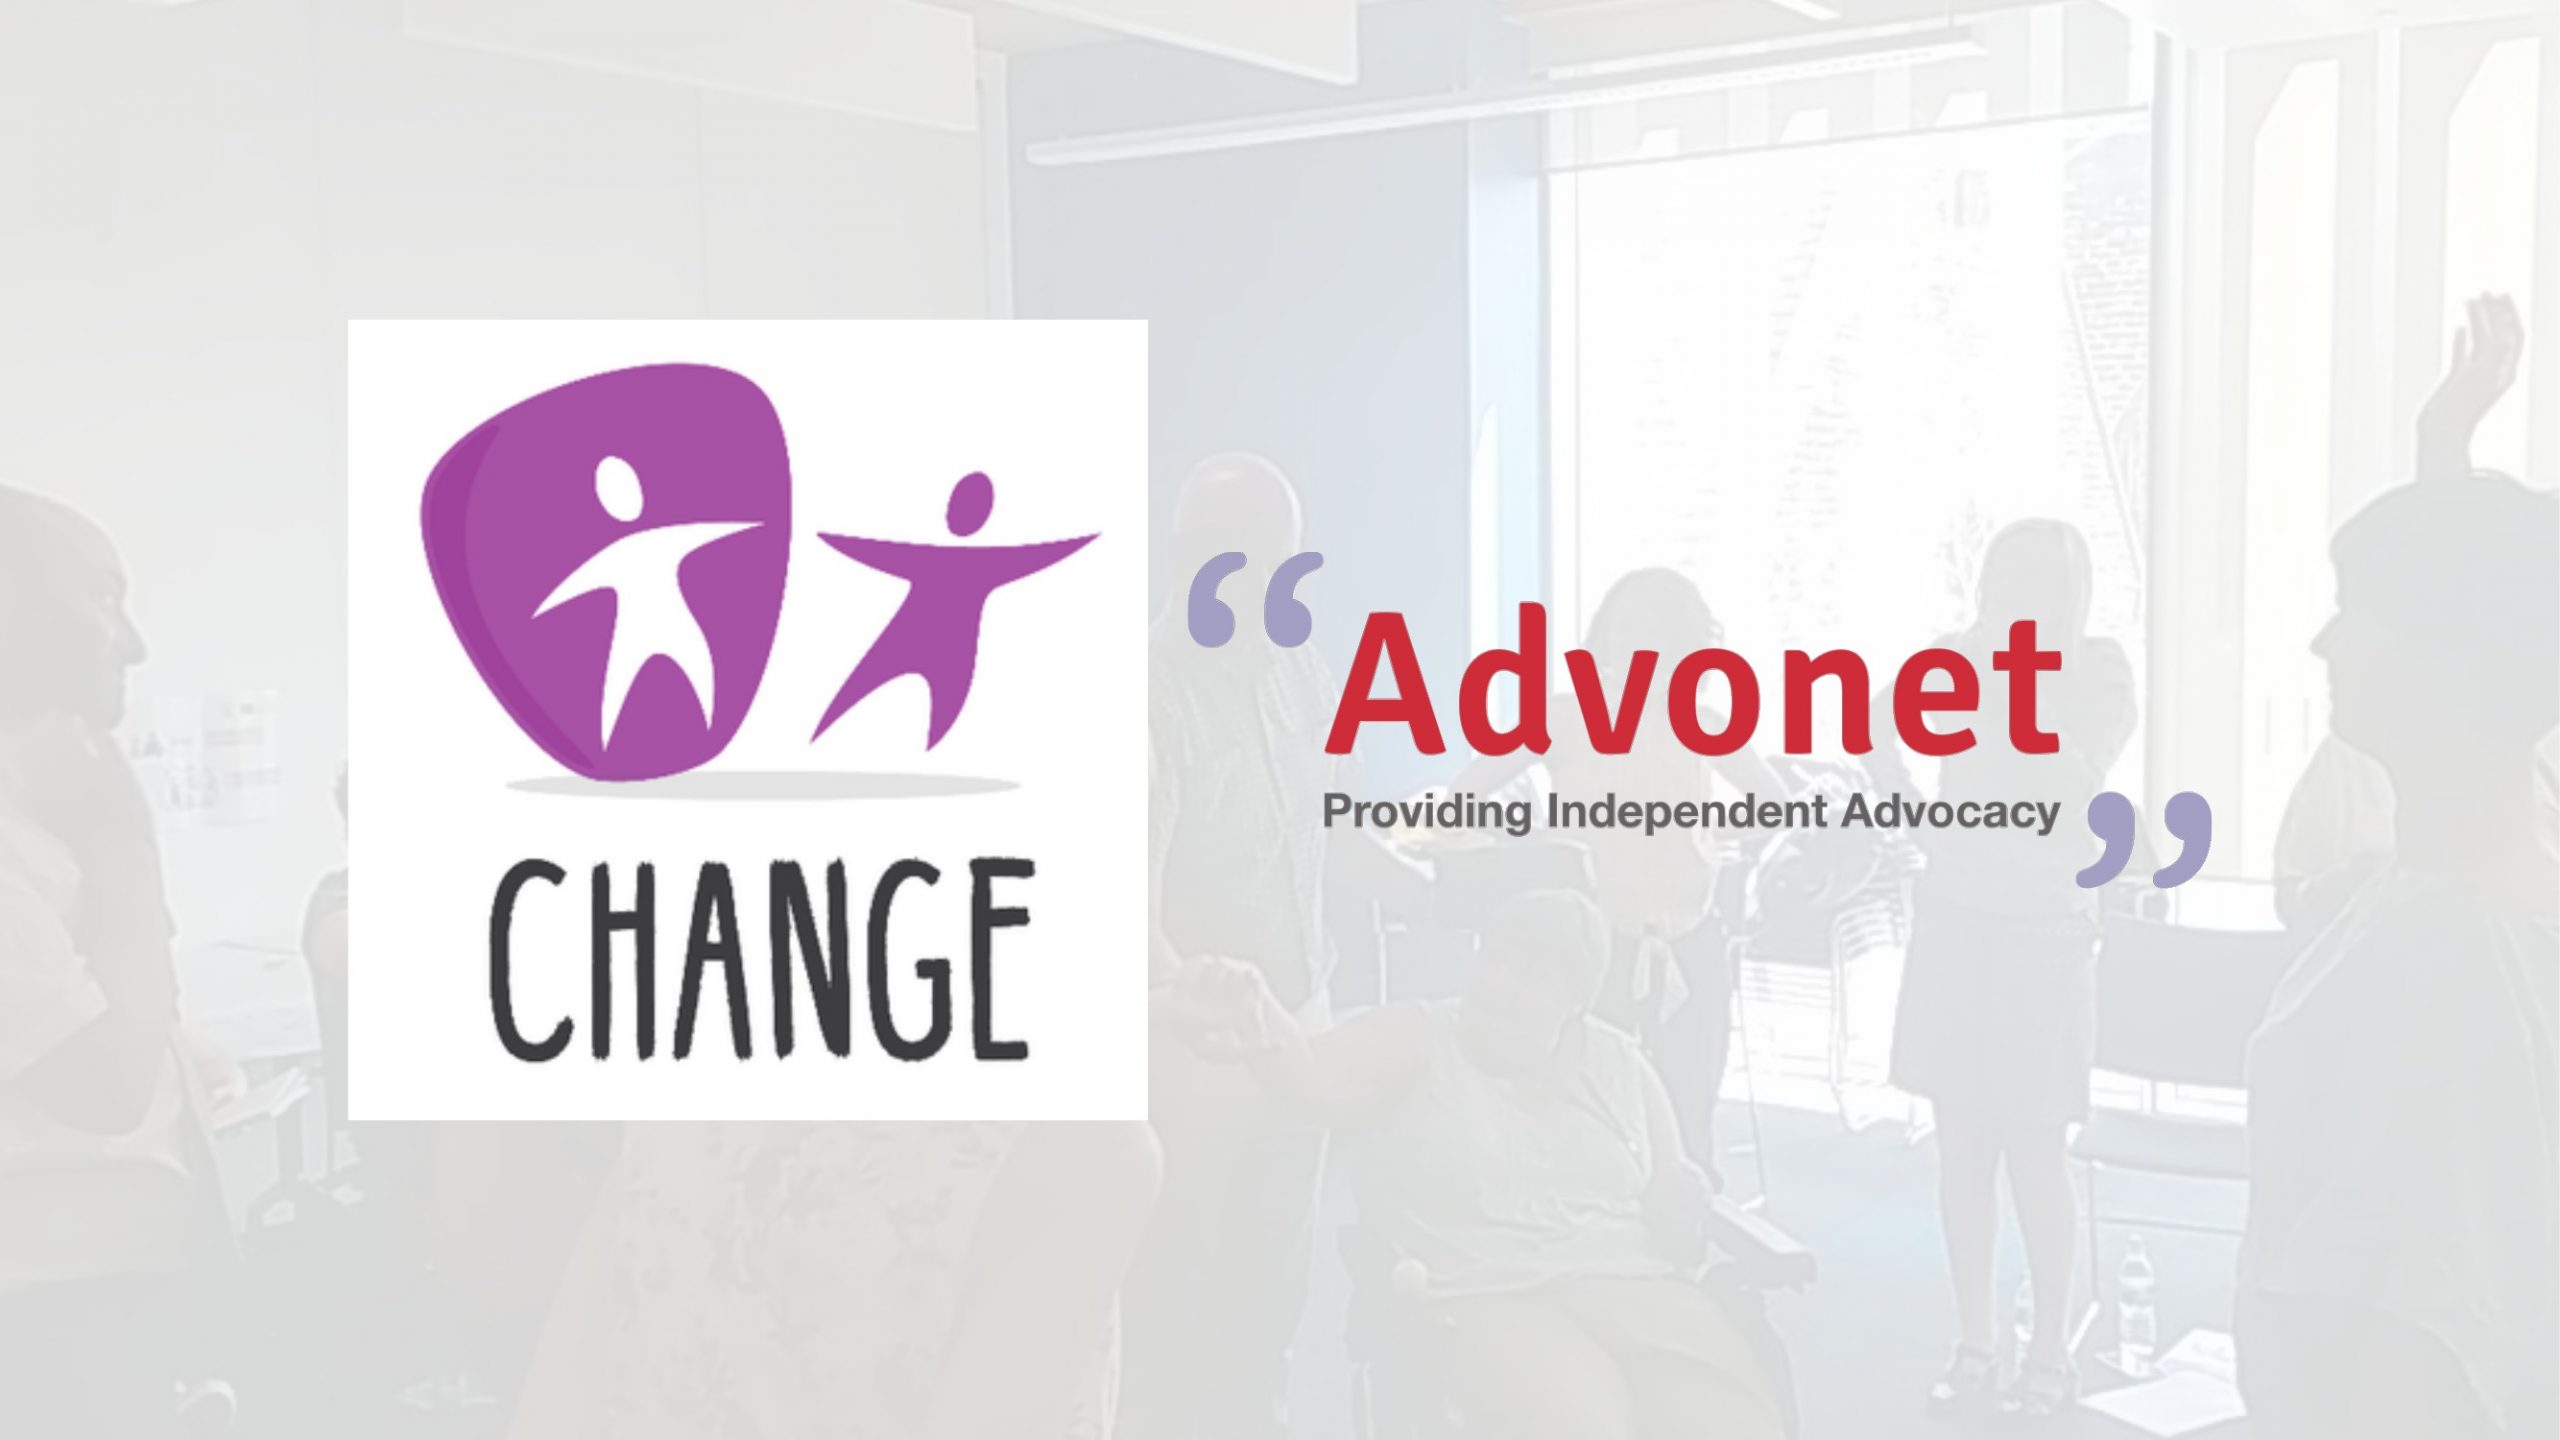 Change and Advonet logos